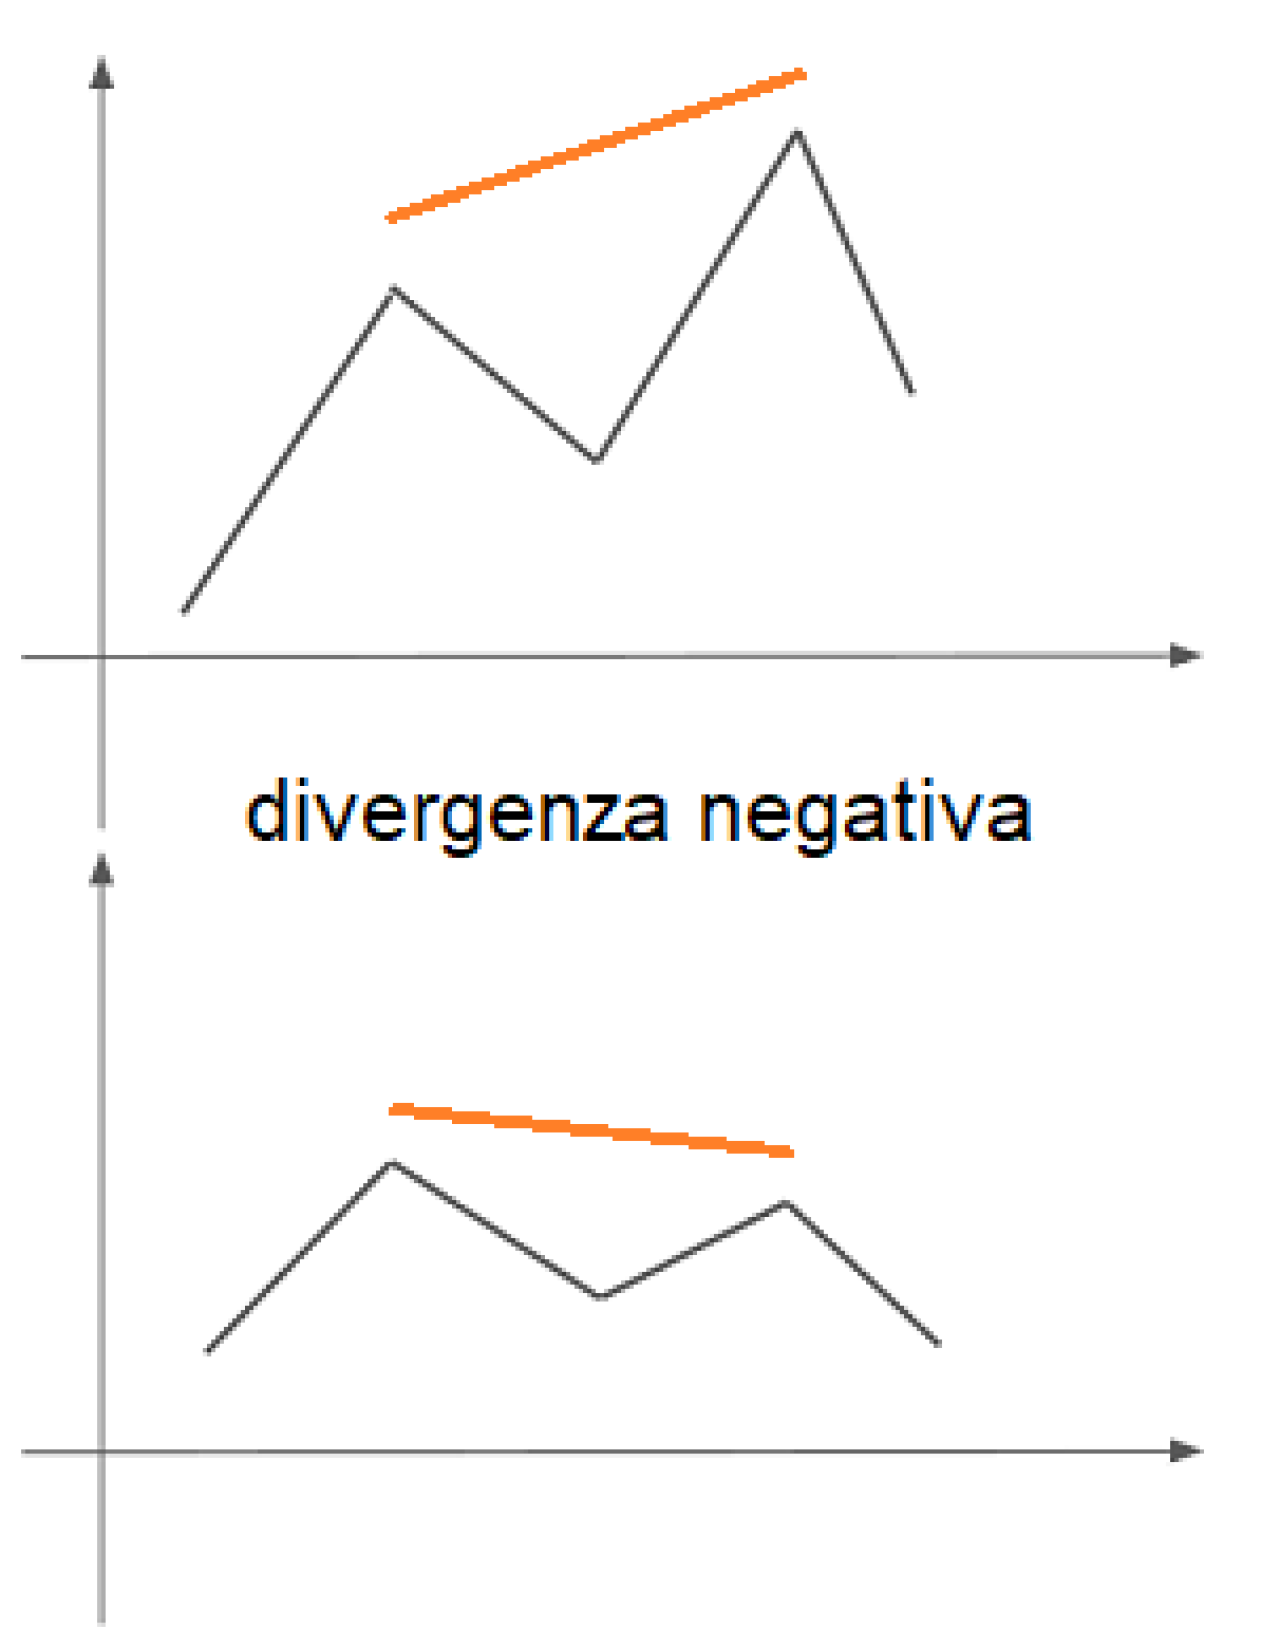 divergenza regolare negativa ribassista nel trading.